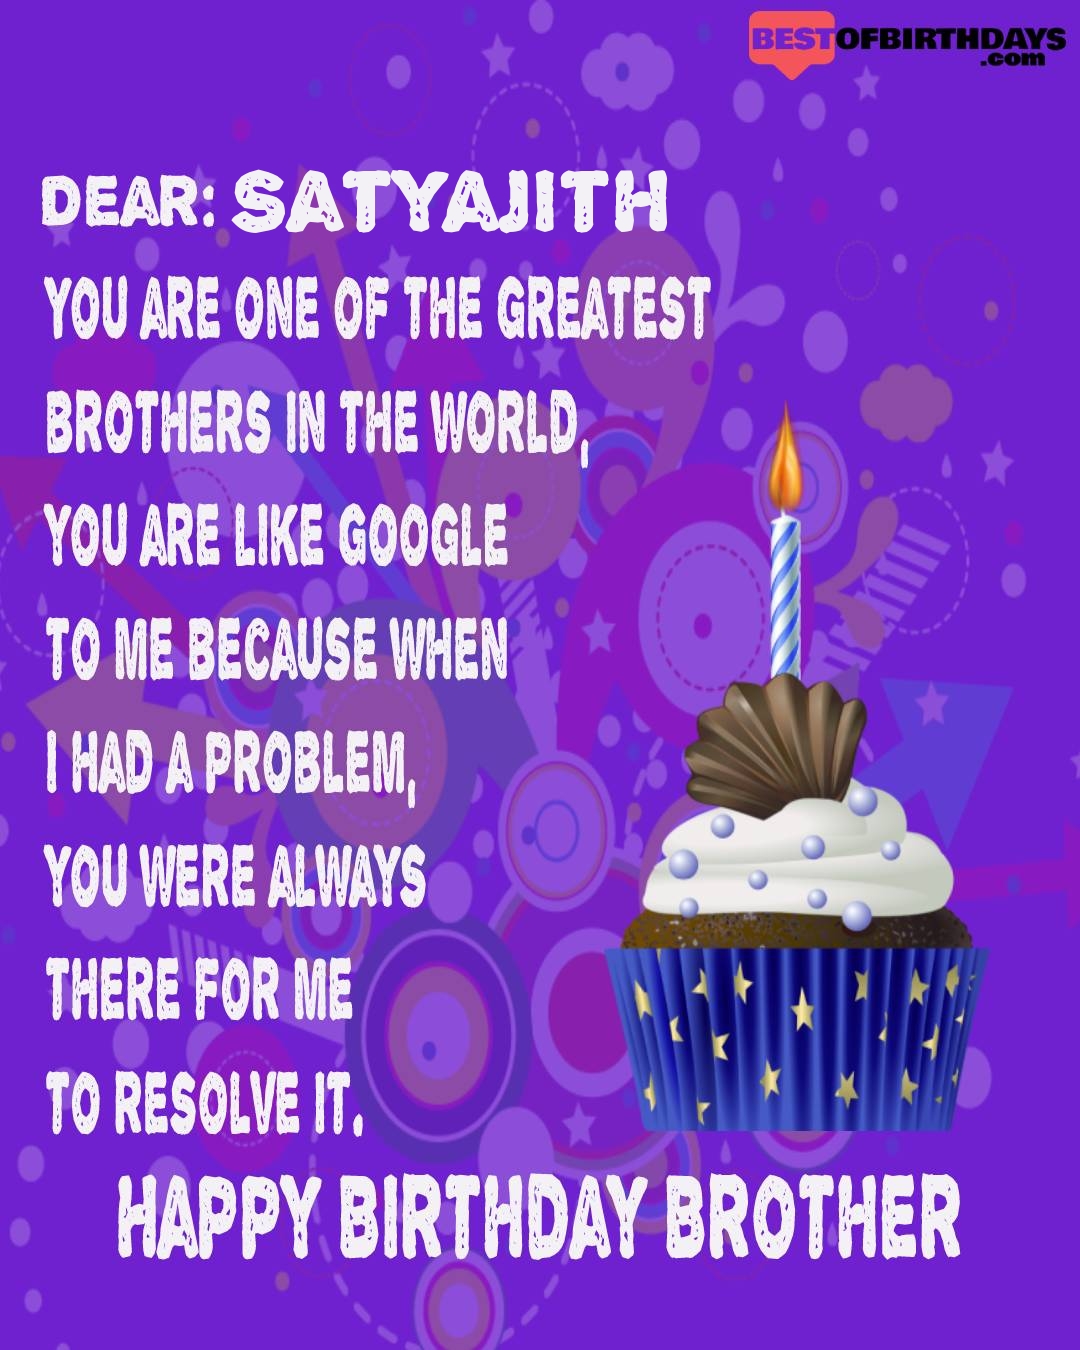 Happy birthday satyajith bhai brother bro